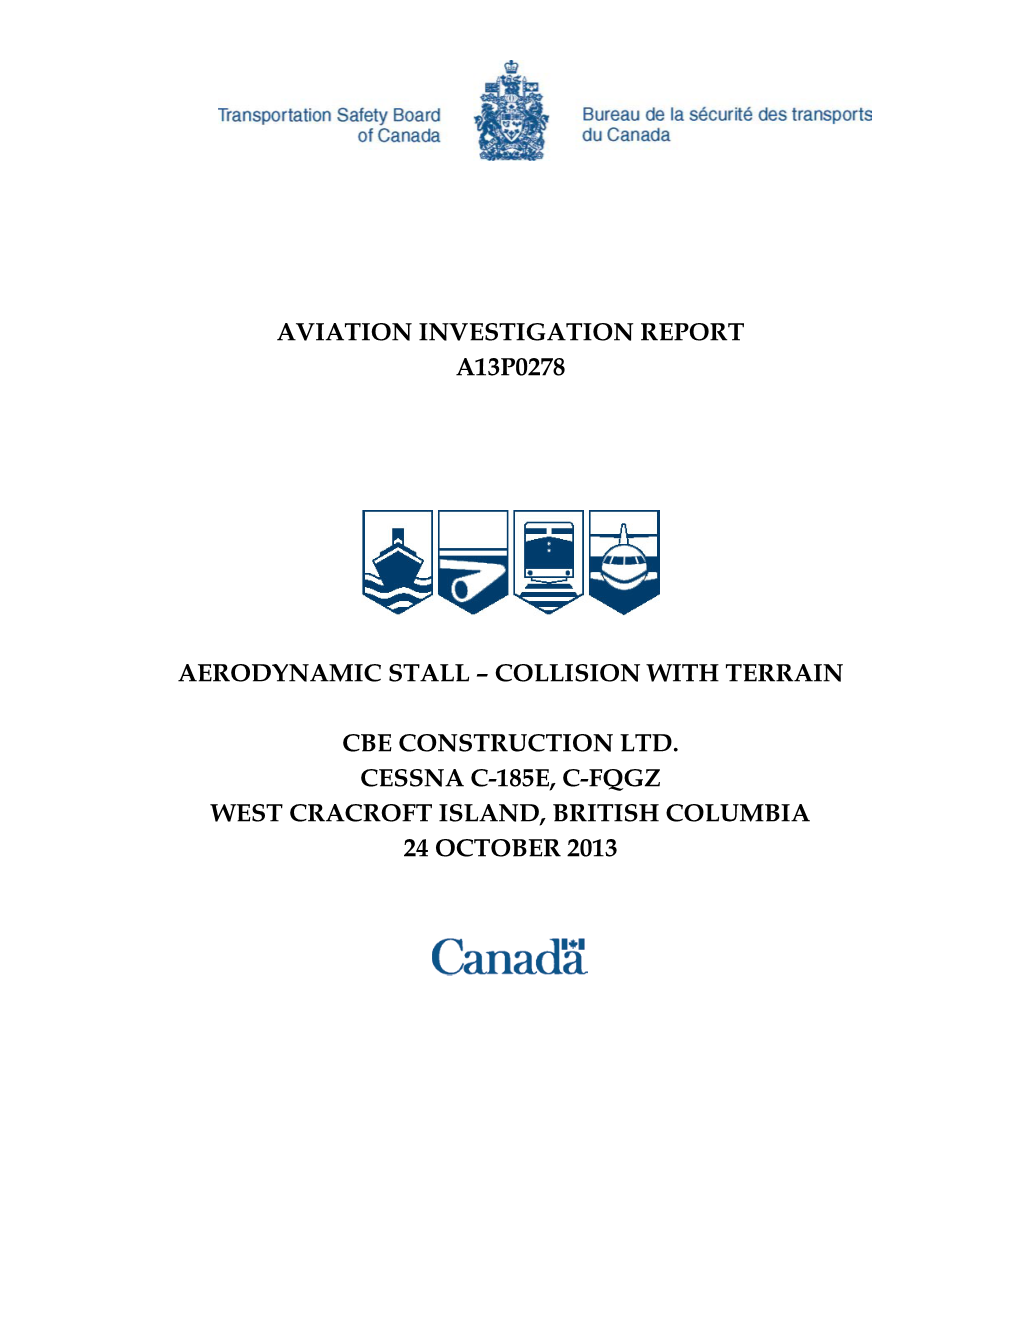 Aviation Investigation Report A13p0278